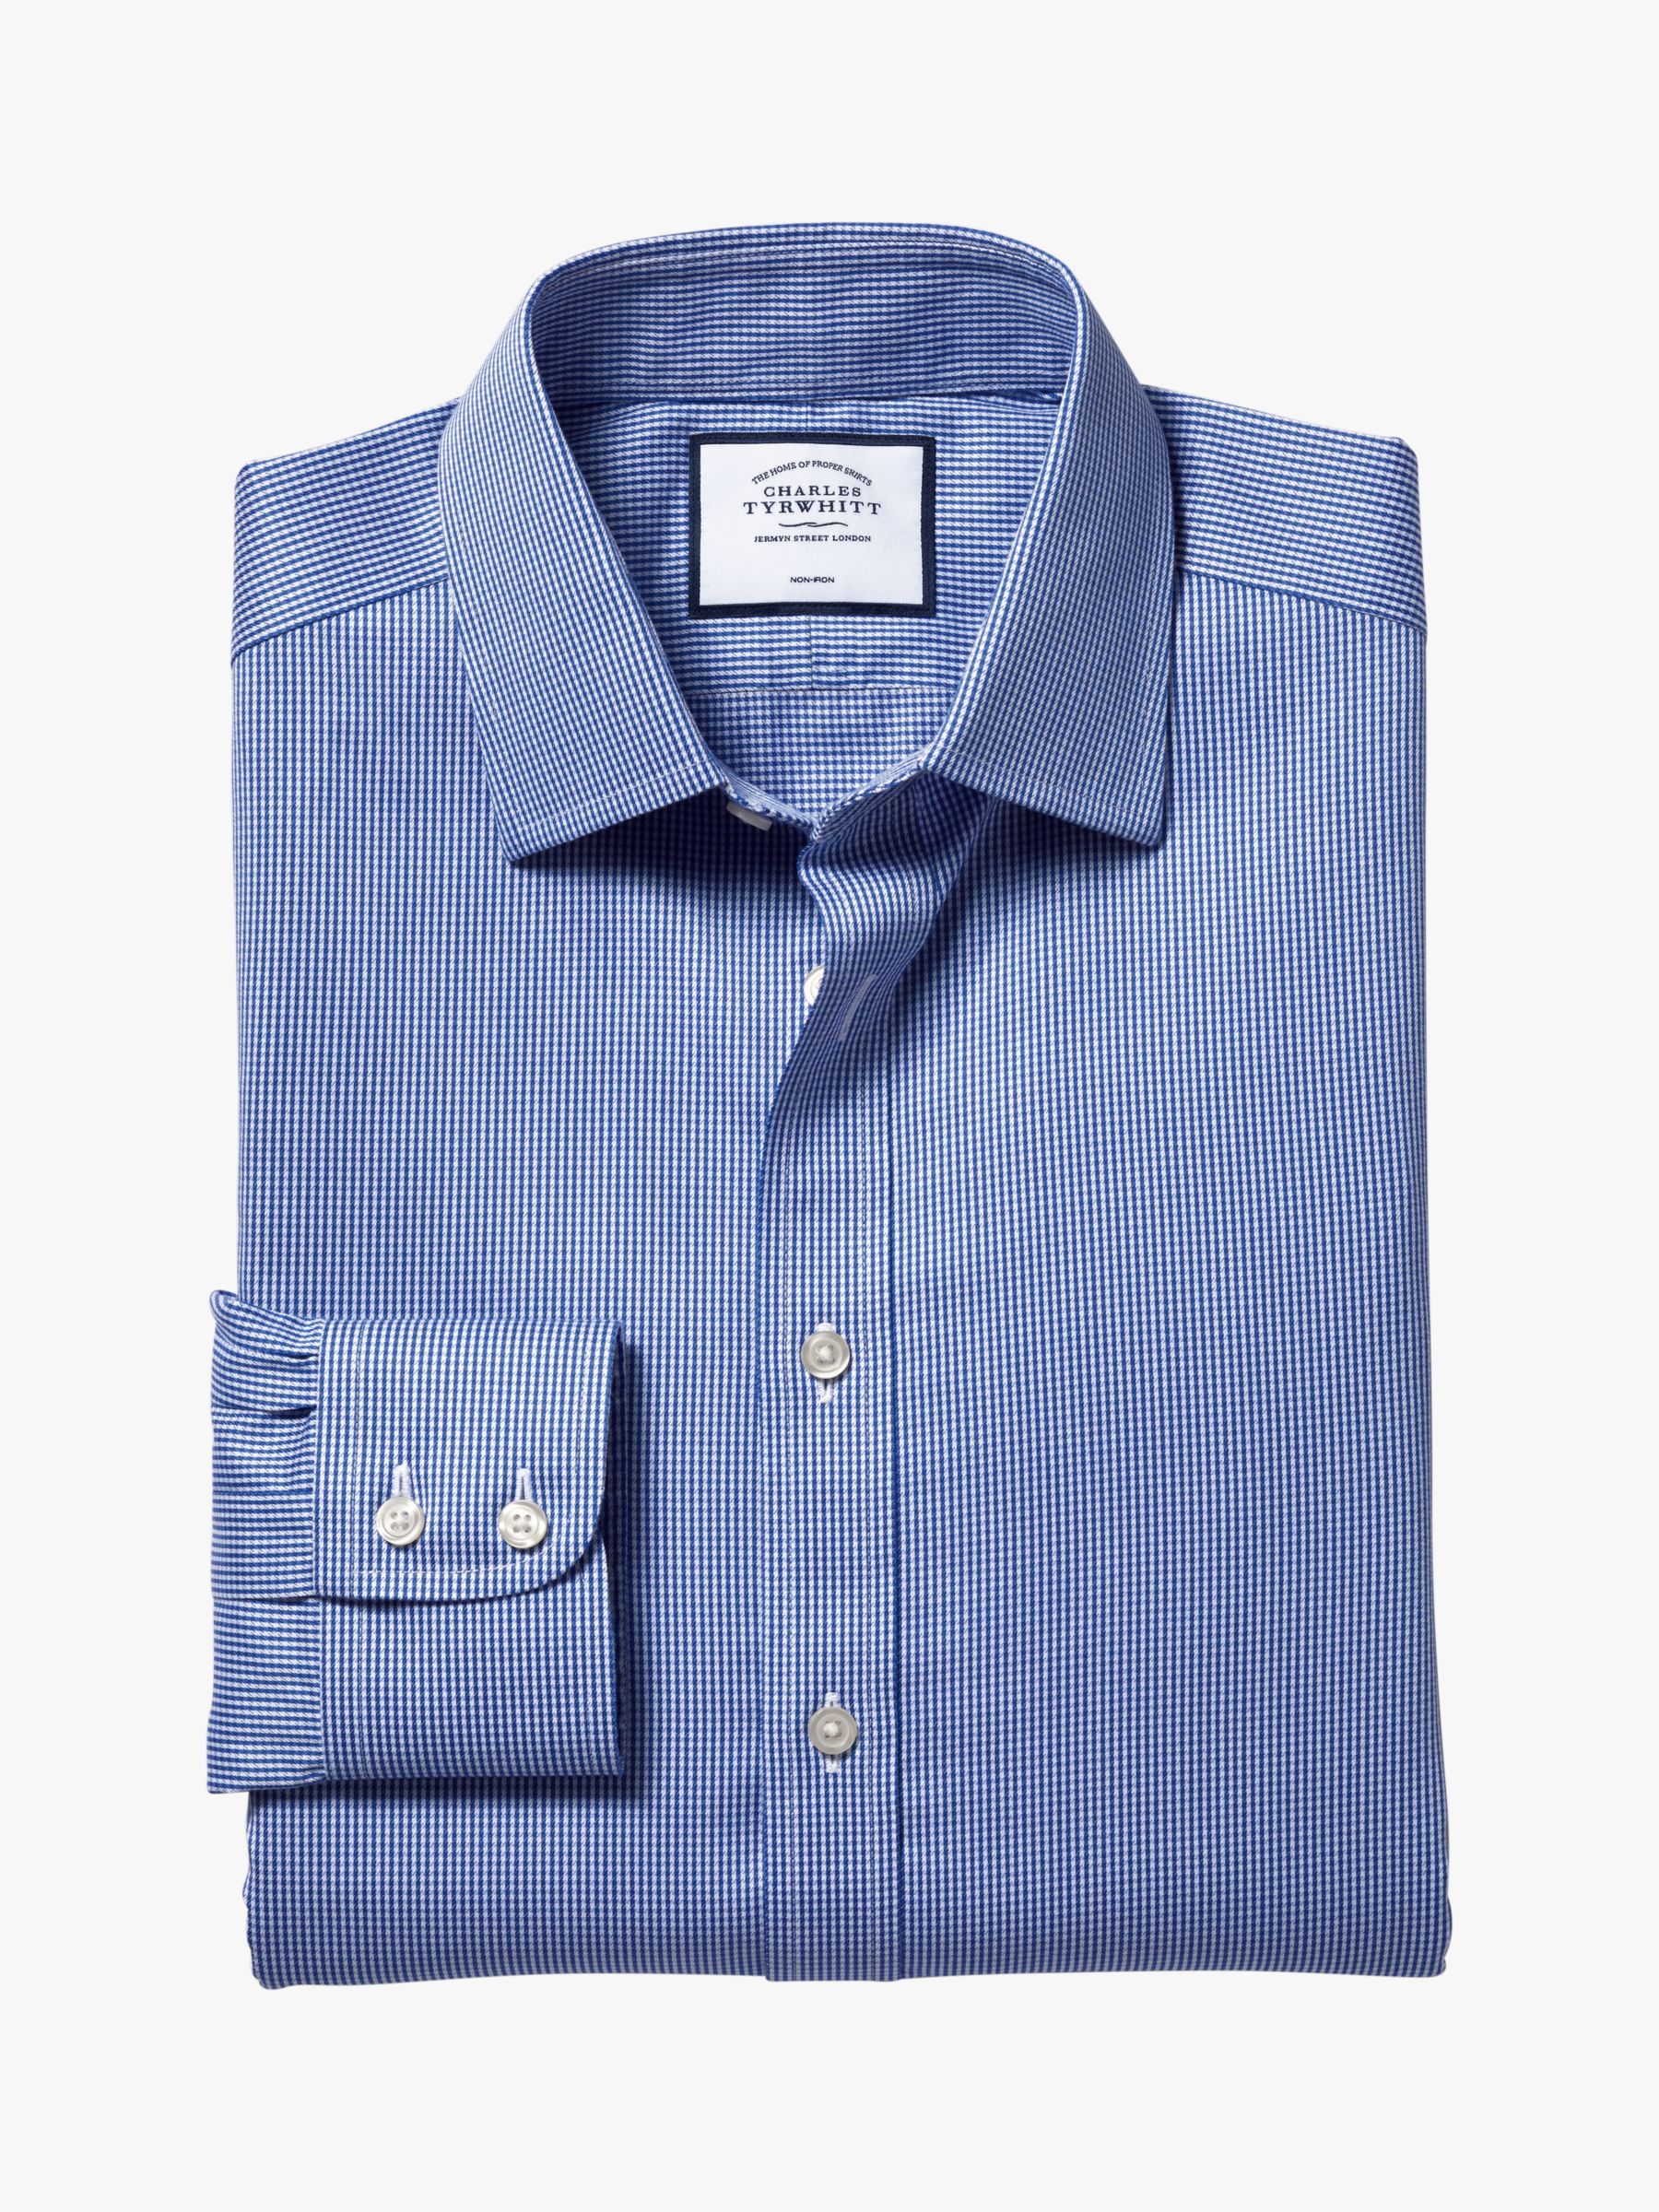 Charles Tyrwhitt Non-Iron Puppytooth Slim Fit Shirt, Royal, 15.5 34